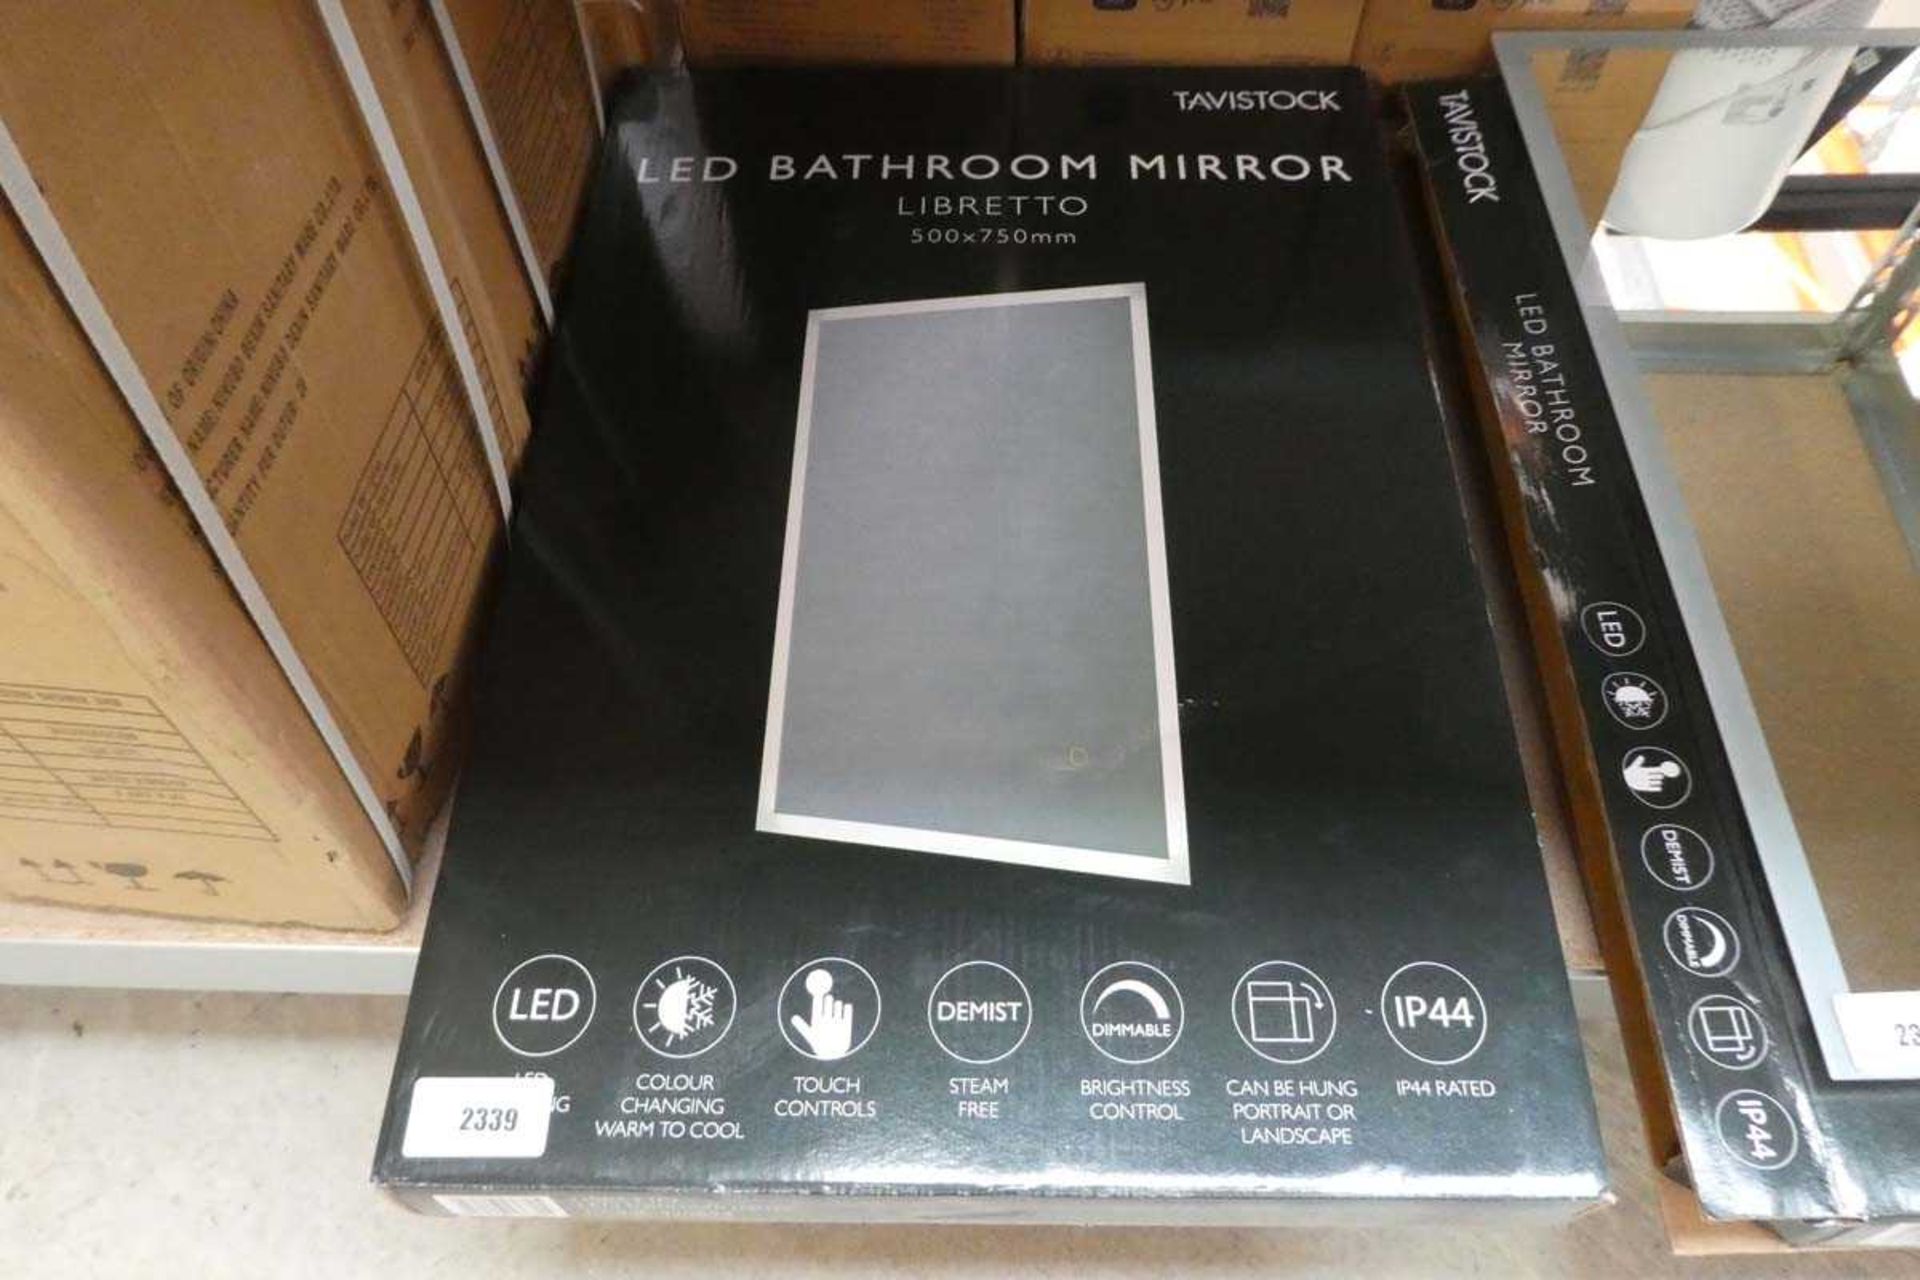 Havistock bathroom LED mirror, boxed